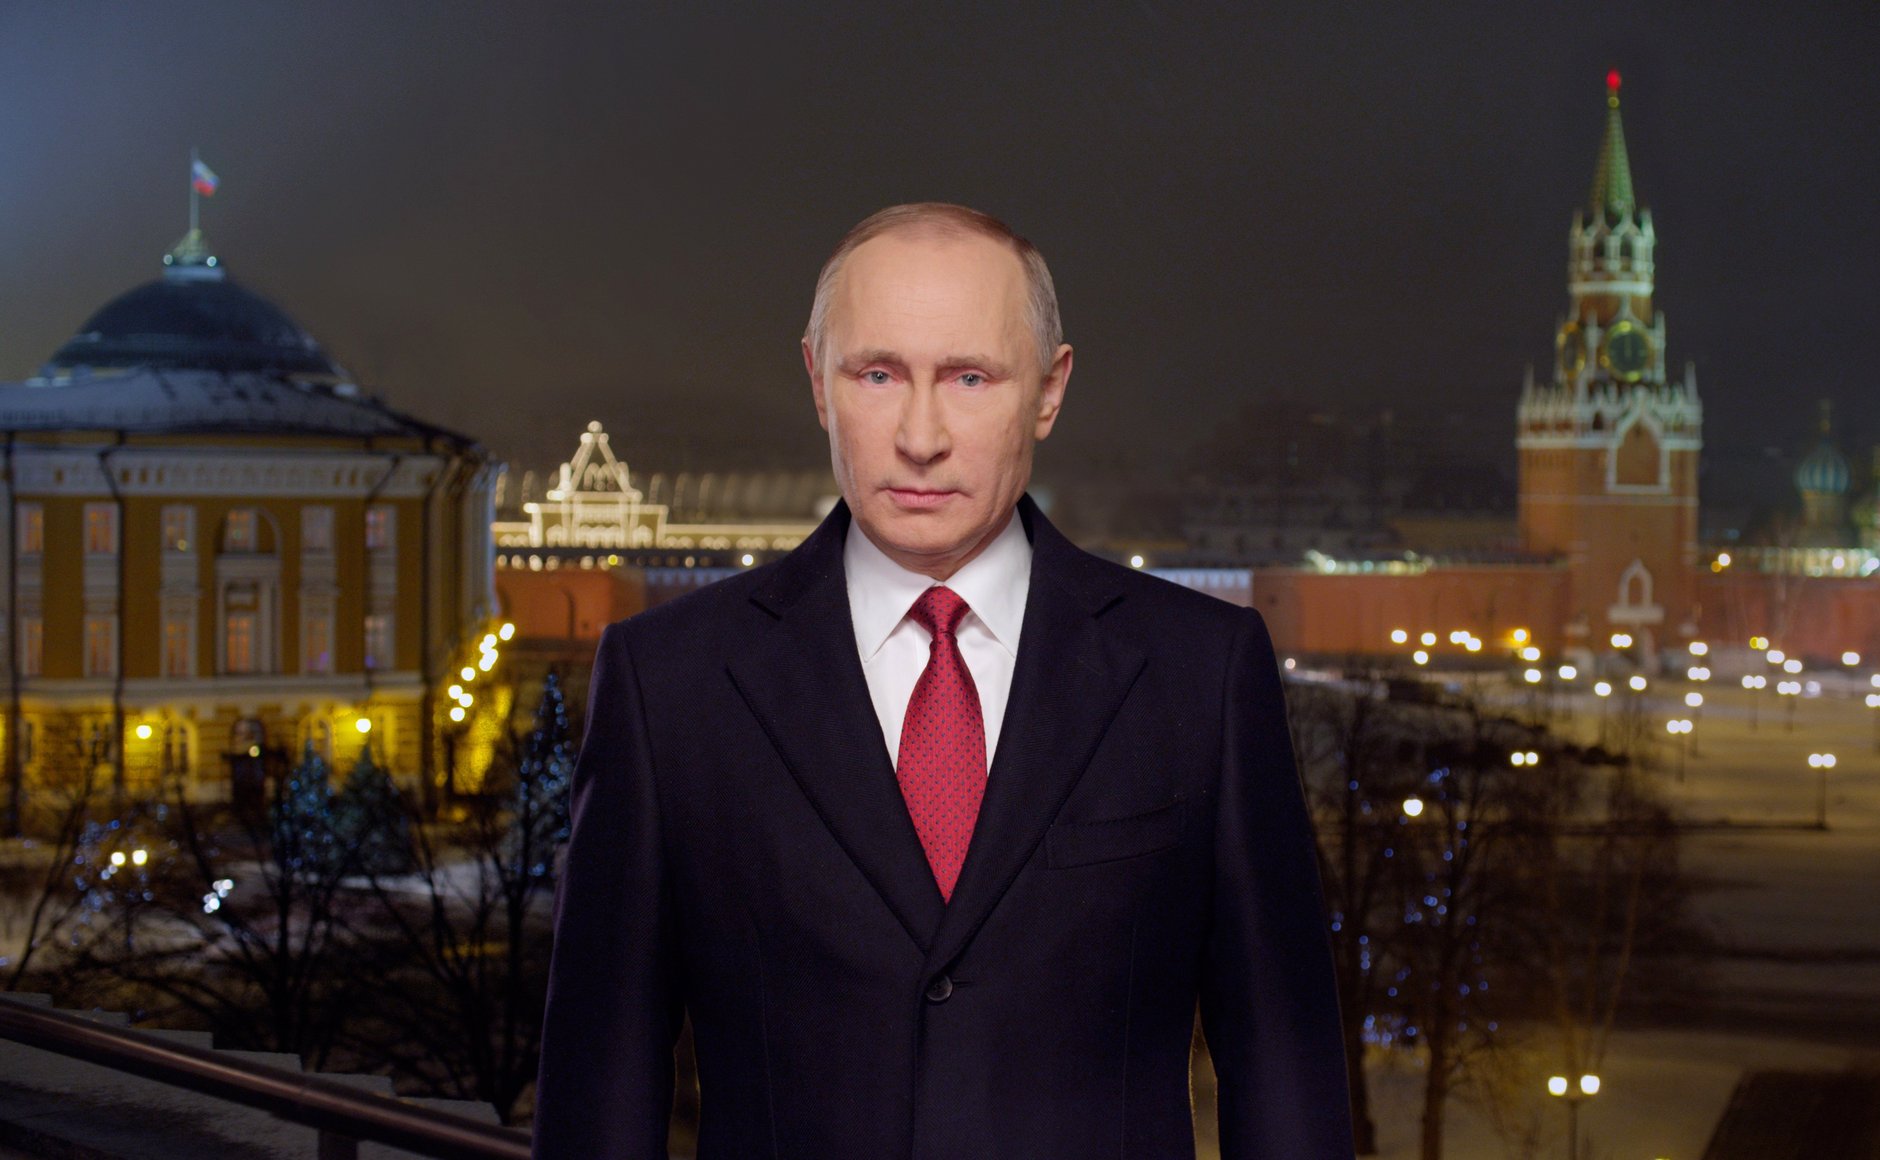 Władimir Putin katastrofa smoleńska 2021